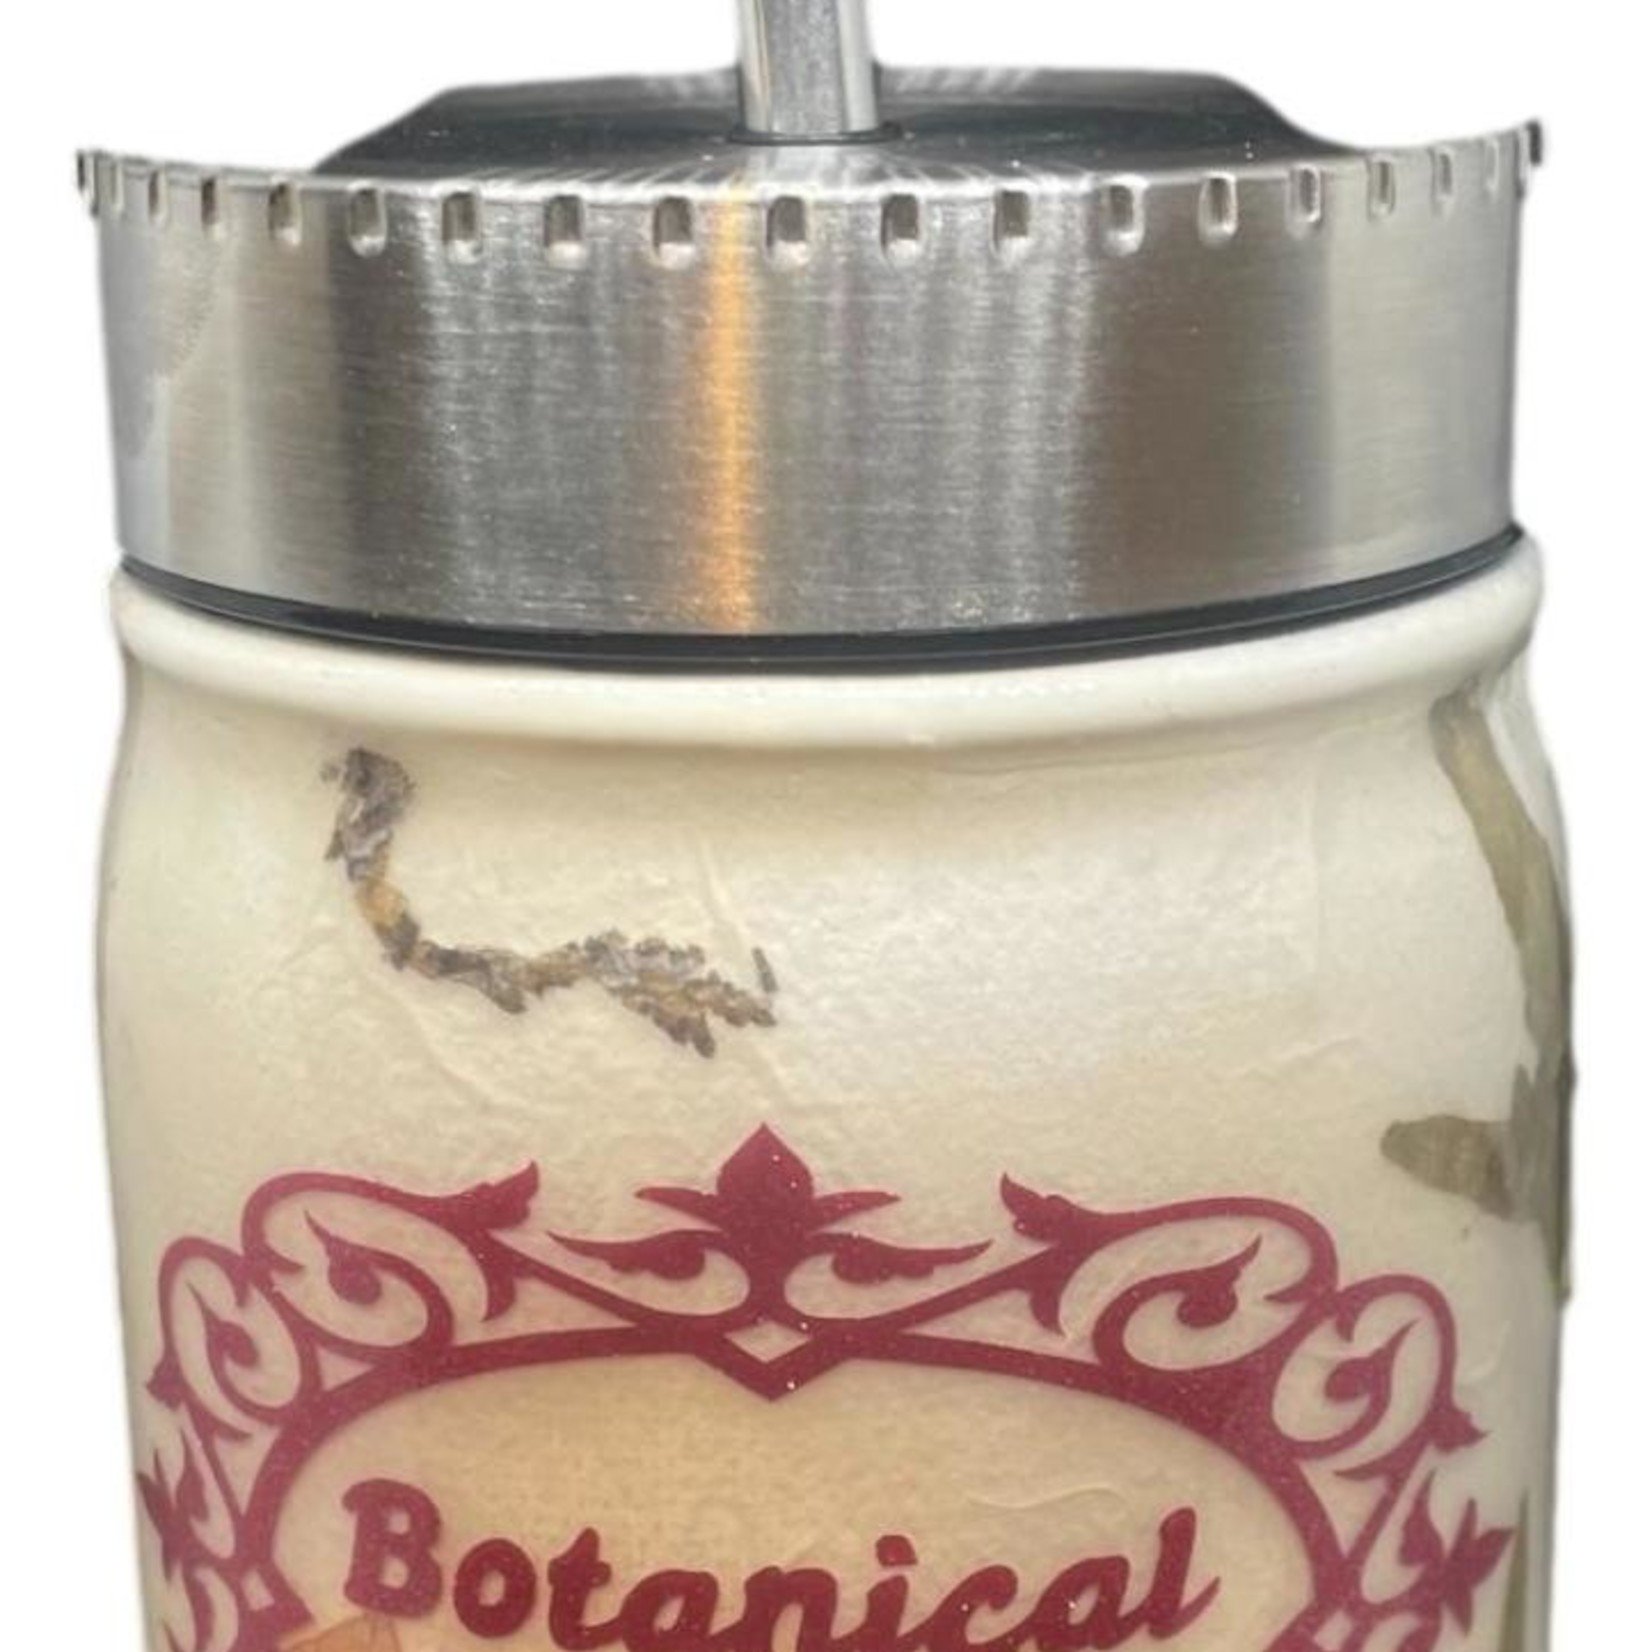 Botanical Soap Co. Mason Jar Tumbler